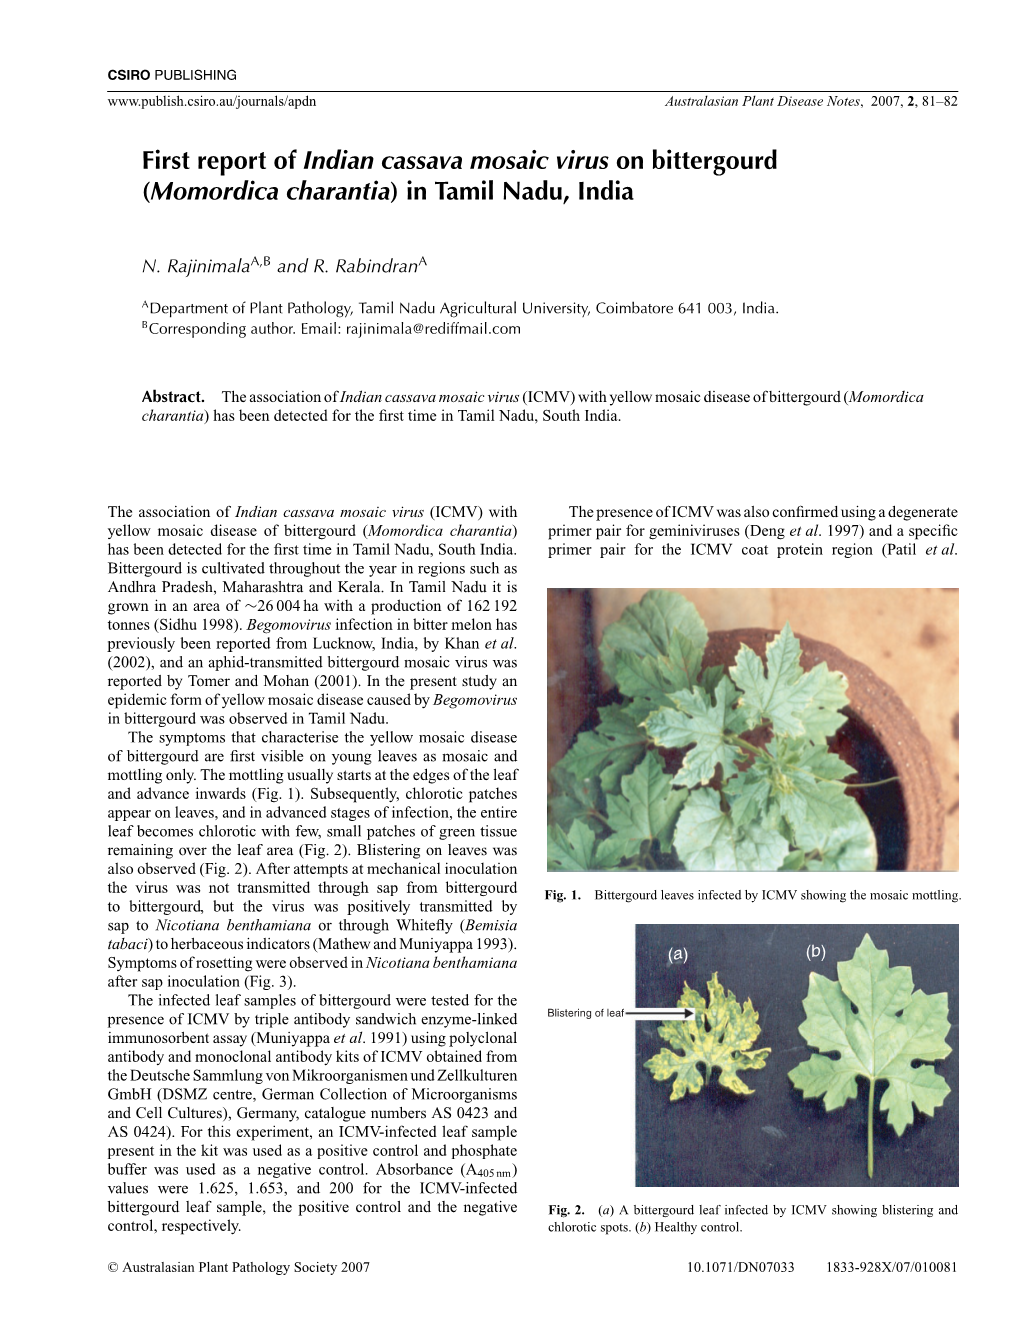 First Report of Indian Cassava Mosaic Virus on Bittergourd (Momordica Charantia) in Tamil Nadu, India